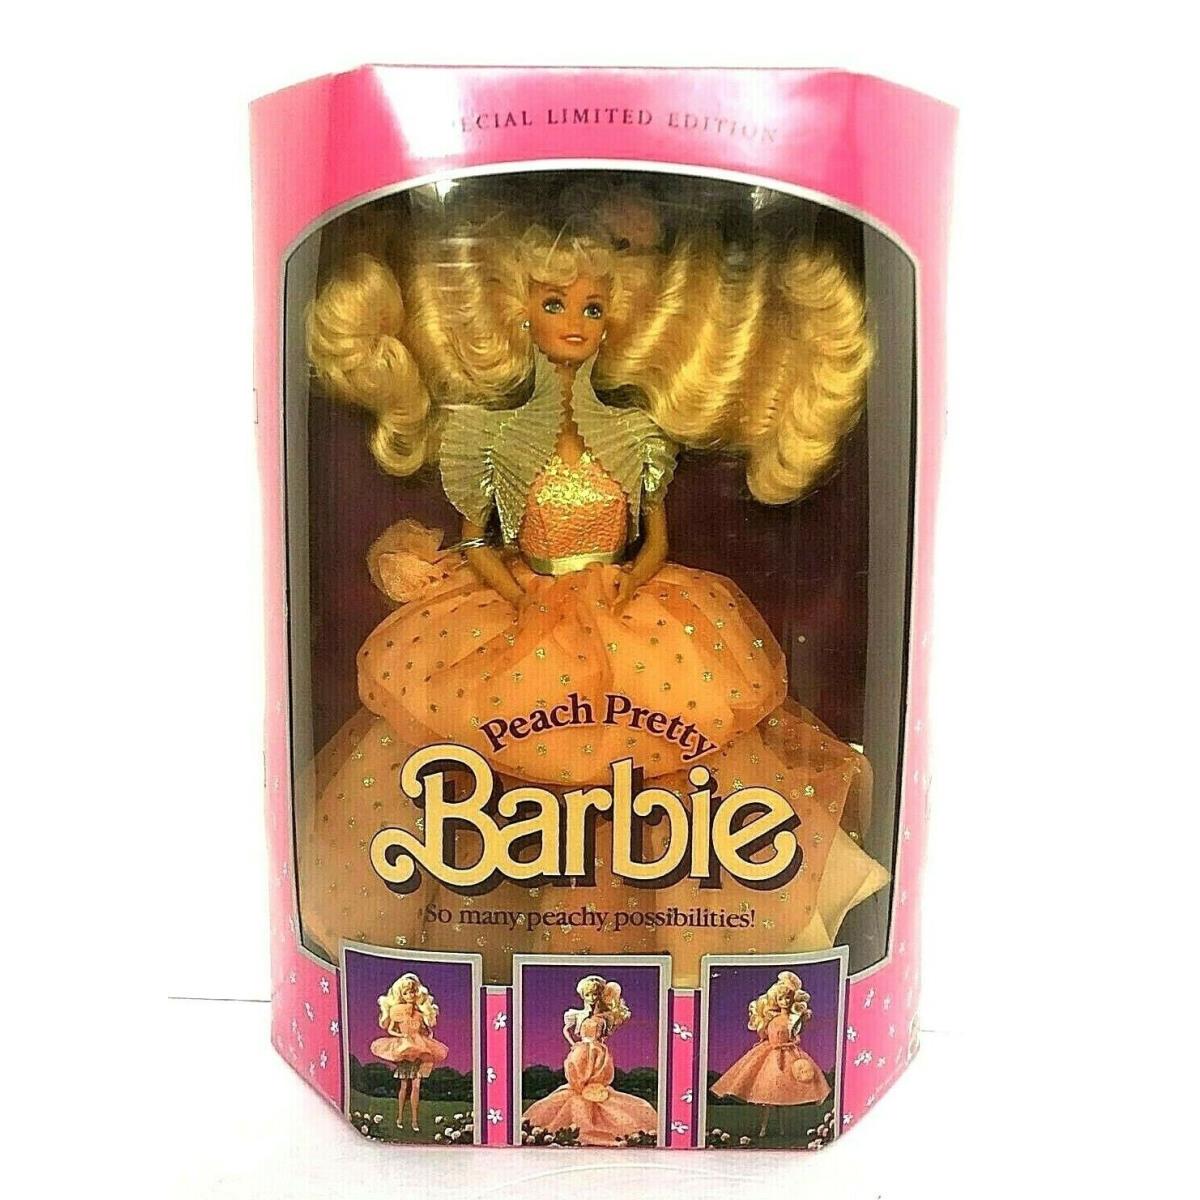 Vintage 1989 Peach Pretty Barbie Doll Special Limited Edition Mattel Mib 4870